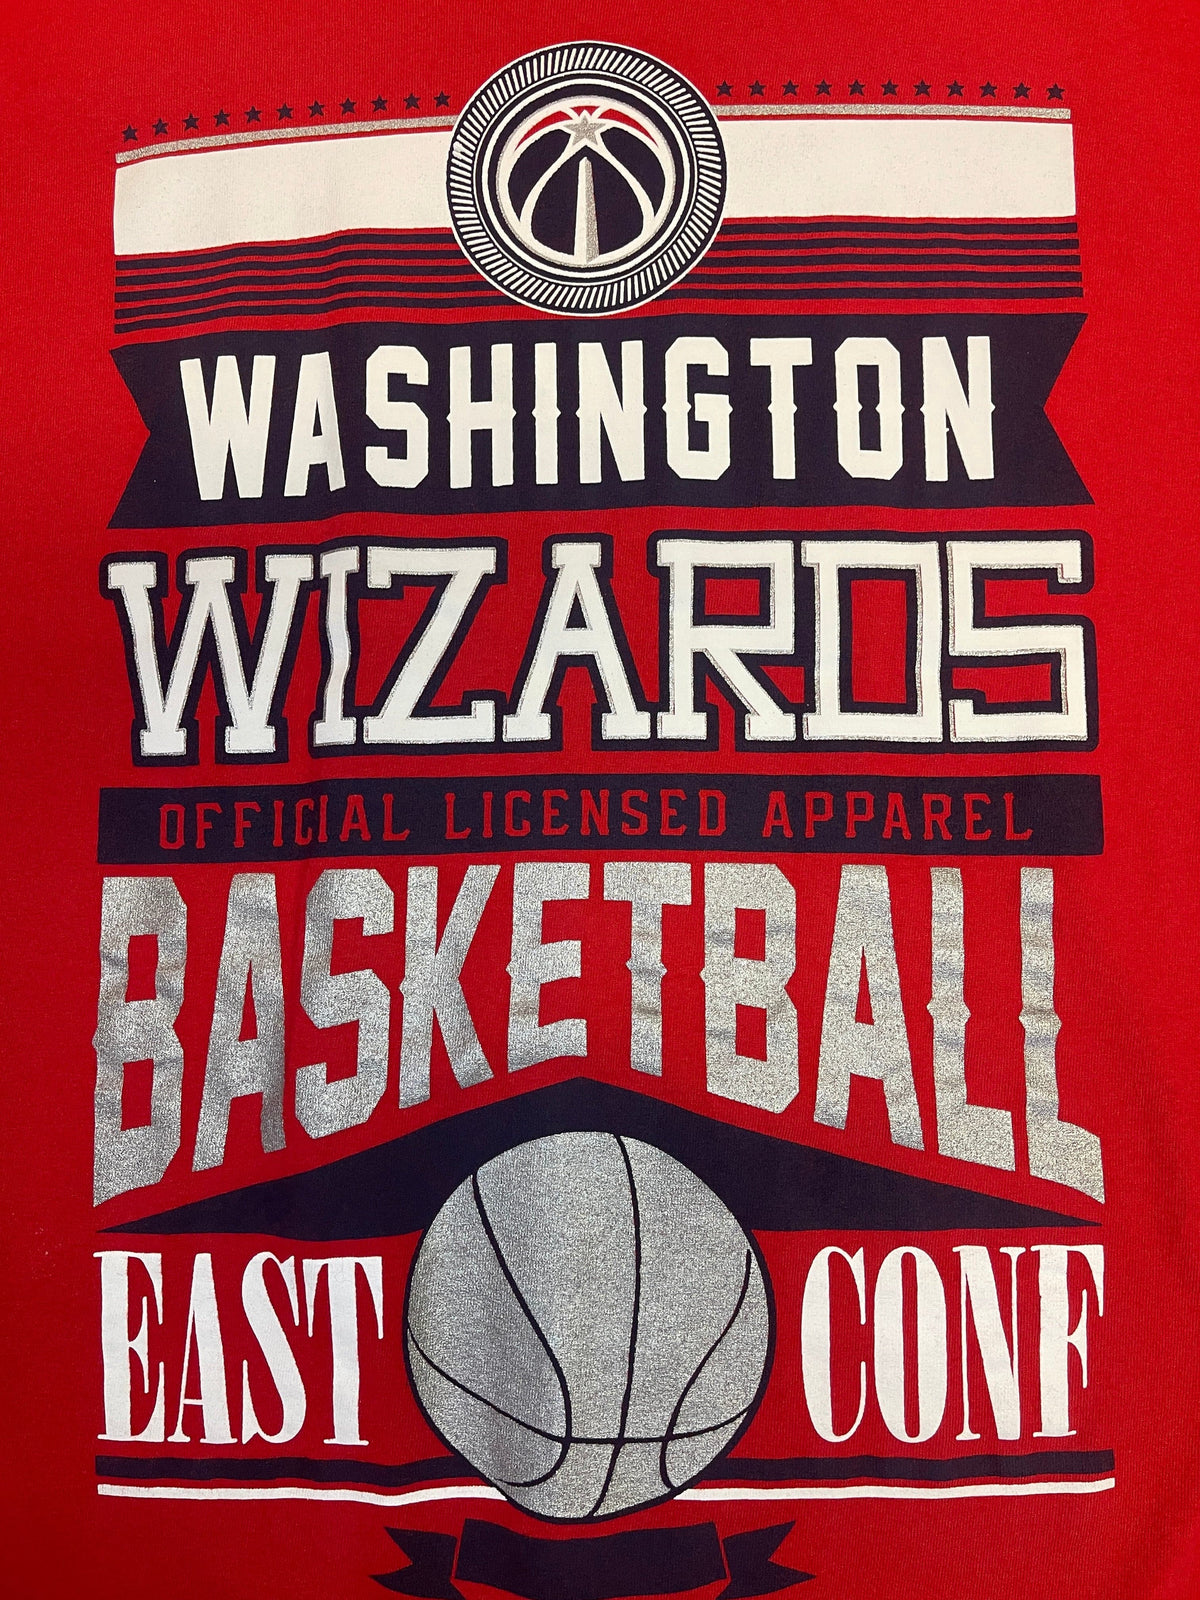 NBA Washington Wizards 100% Cotton Red T-Shirt Men's 3X-Large